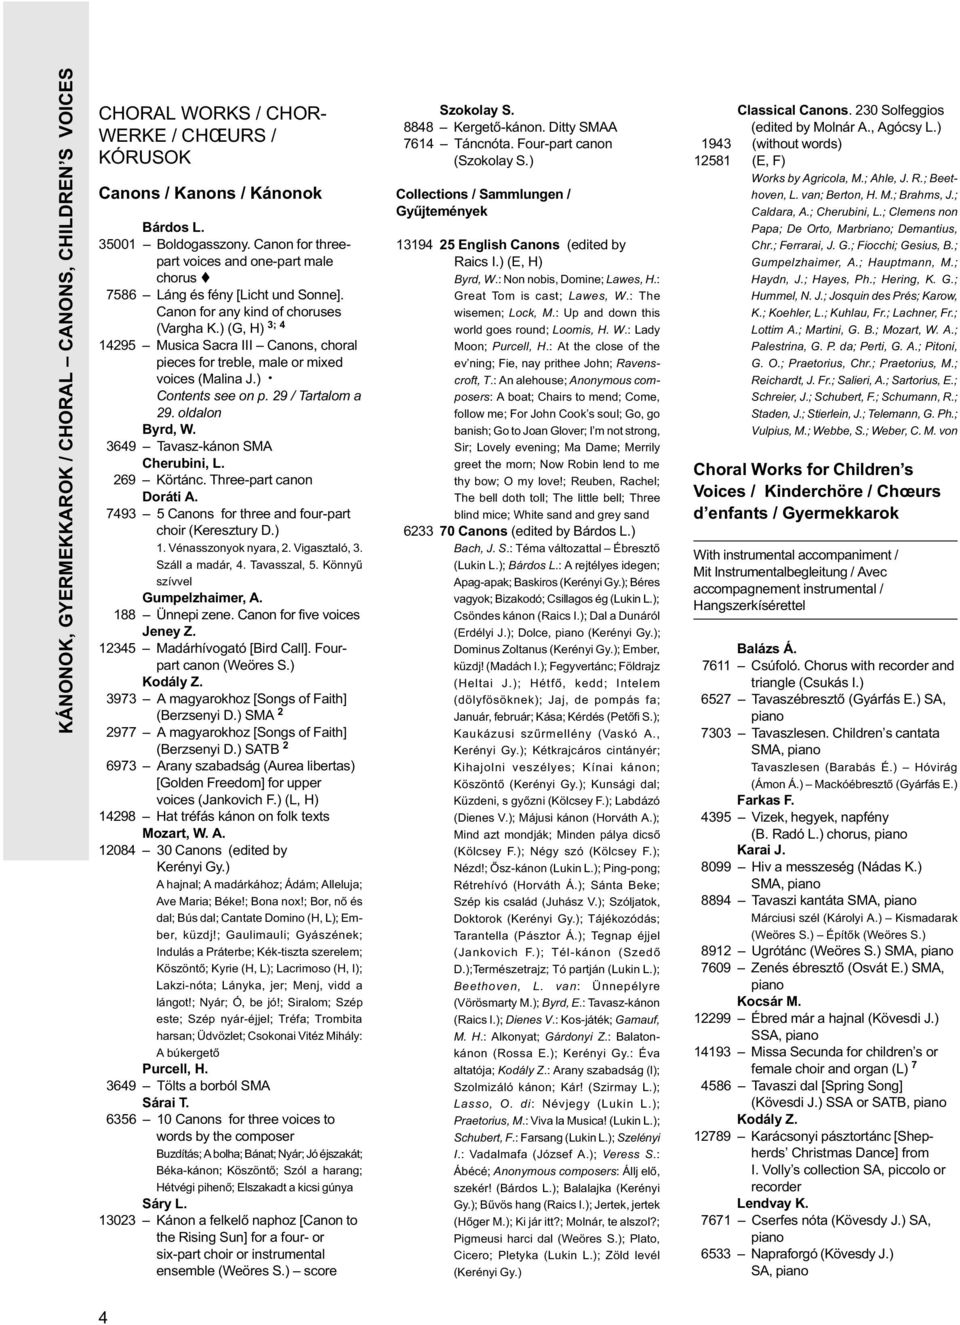 ) (G, H) 3; 4 14295 Musica Sacra III Canons, choral pieces for treble, male or mixed voices (Malina J.) Contents see on p. 29 / Tartalom a 29. oldalon Byrd, W. 349 Tavasz-kánon SMA Cherubini, L.